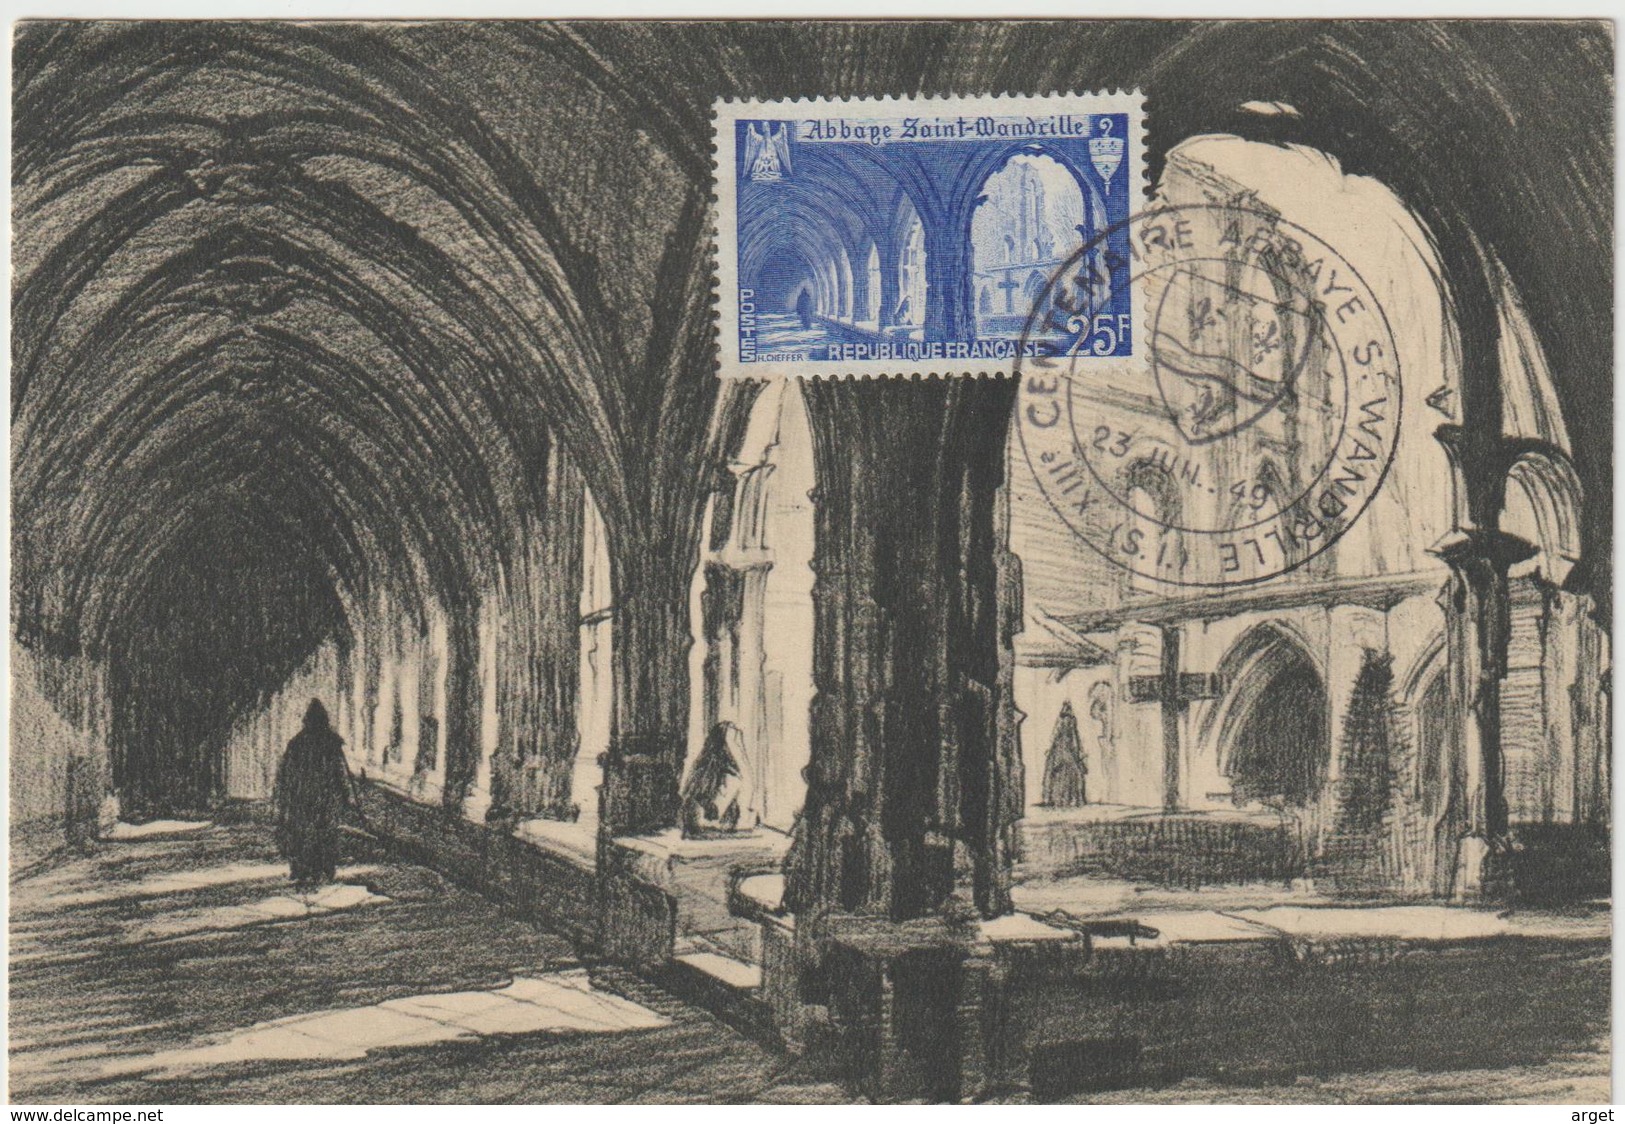 Carte-Maximum France N°Yvert 842, SAINT - WANDRILLE, Obl Ill 23.7.49 (Ed De Fontenelle) - 1940-1949